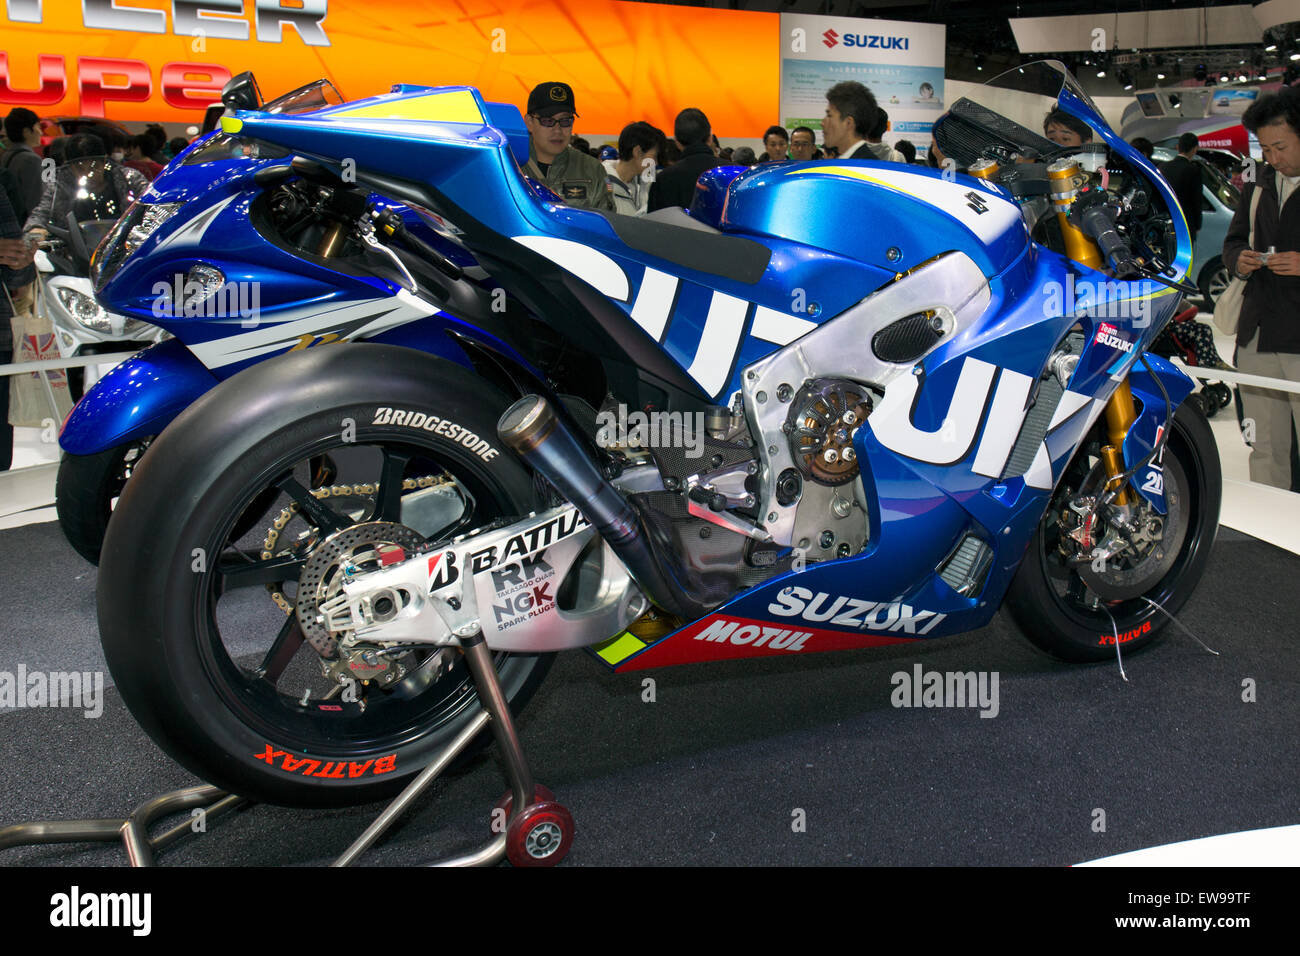 Suzuki motogp hi-res stock photography and images - Alamy